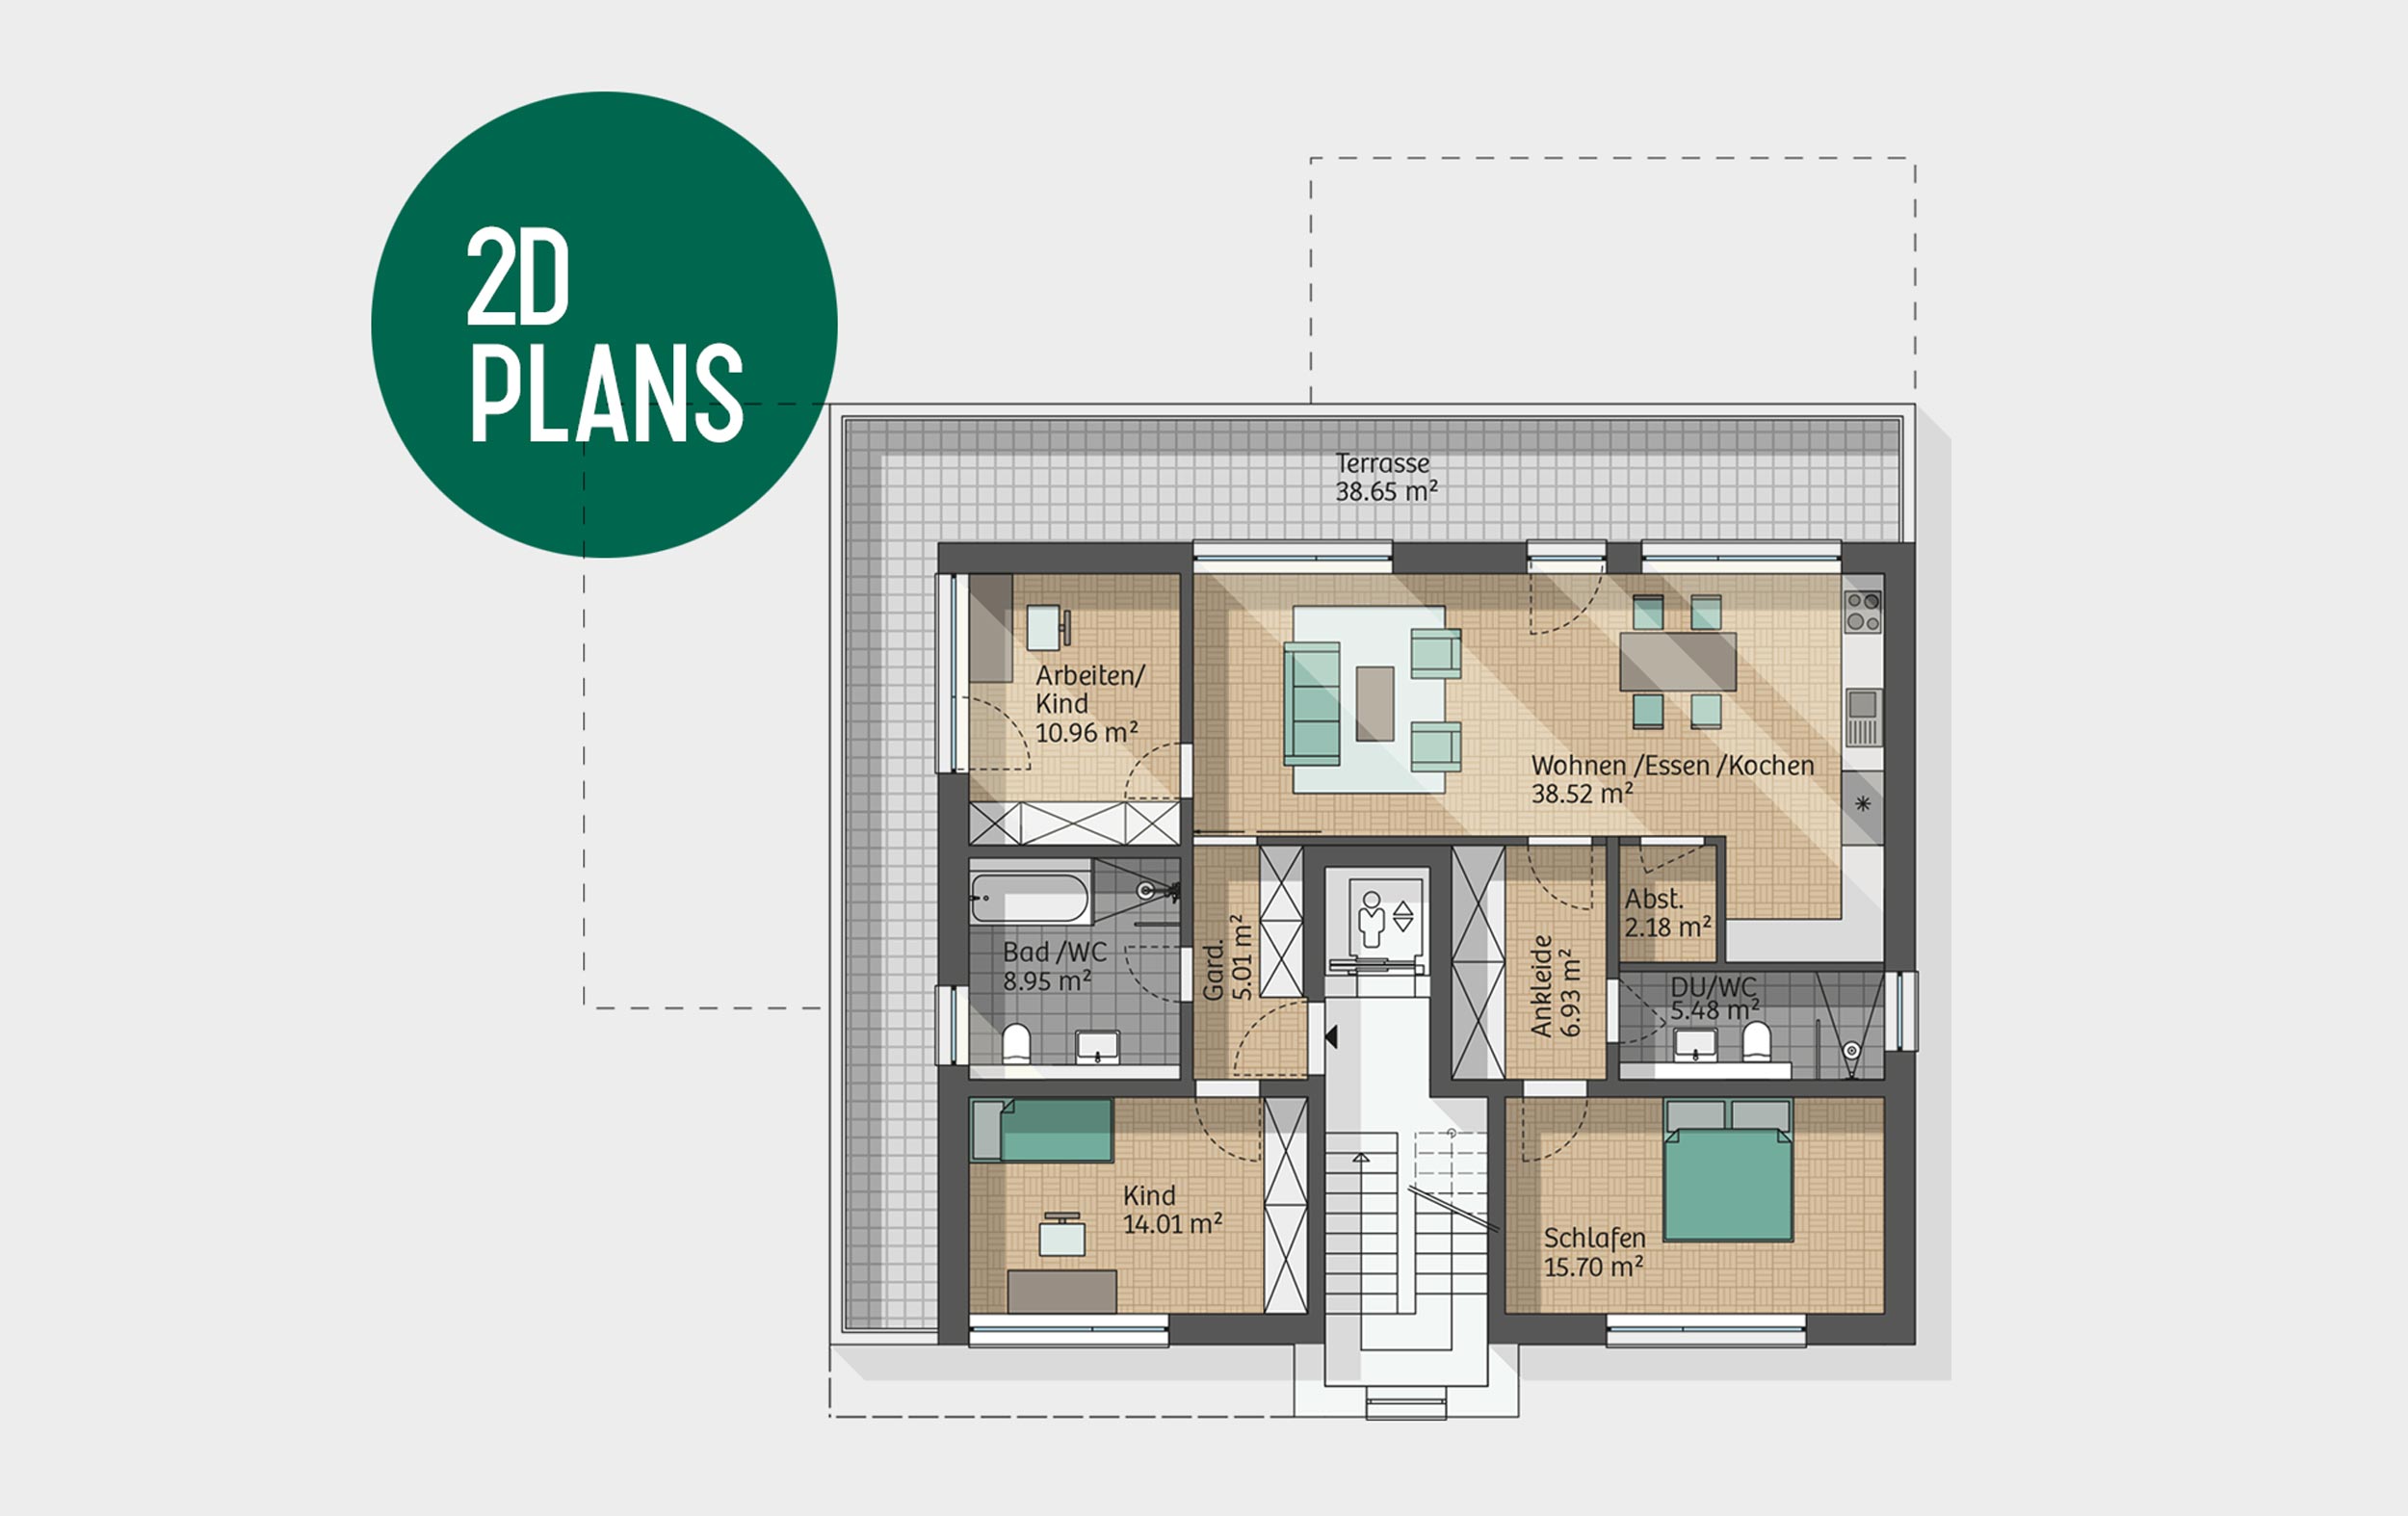 Haus im Haus plans by GPU Design